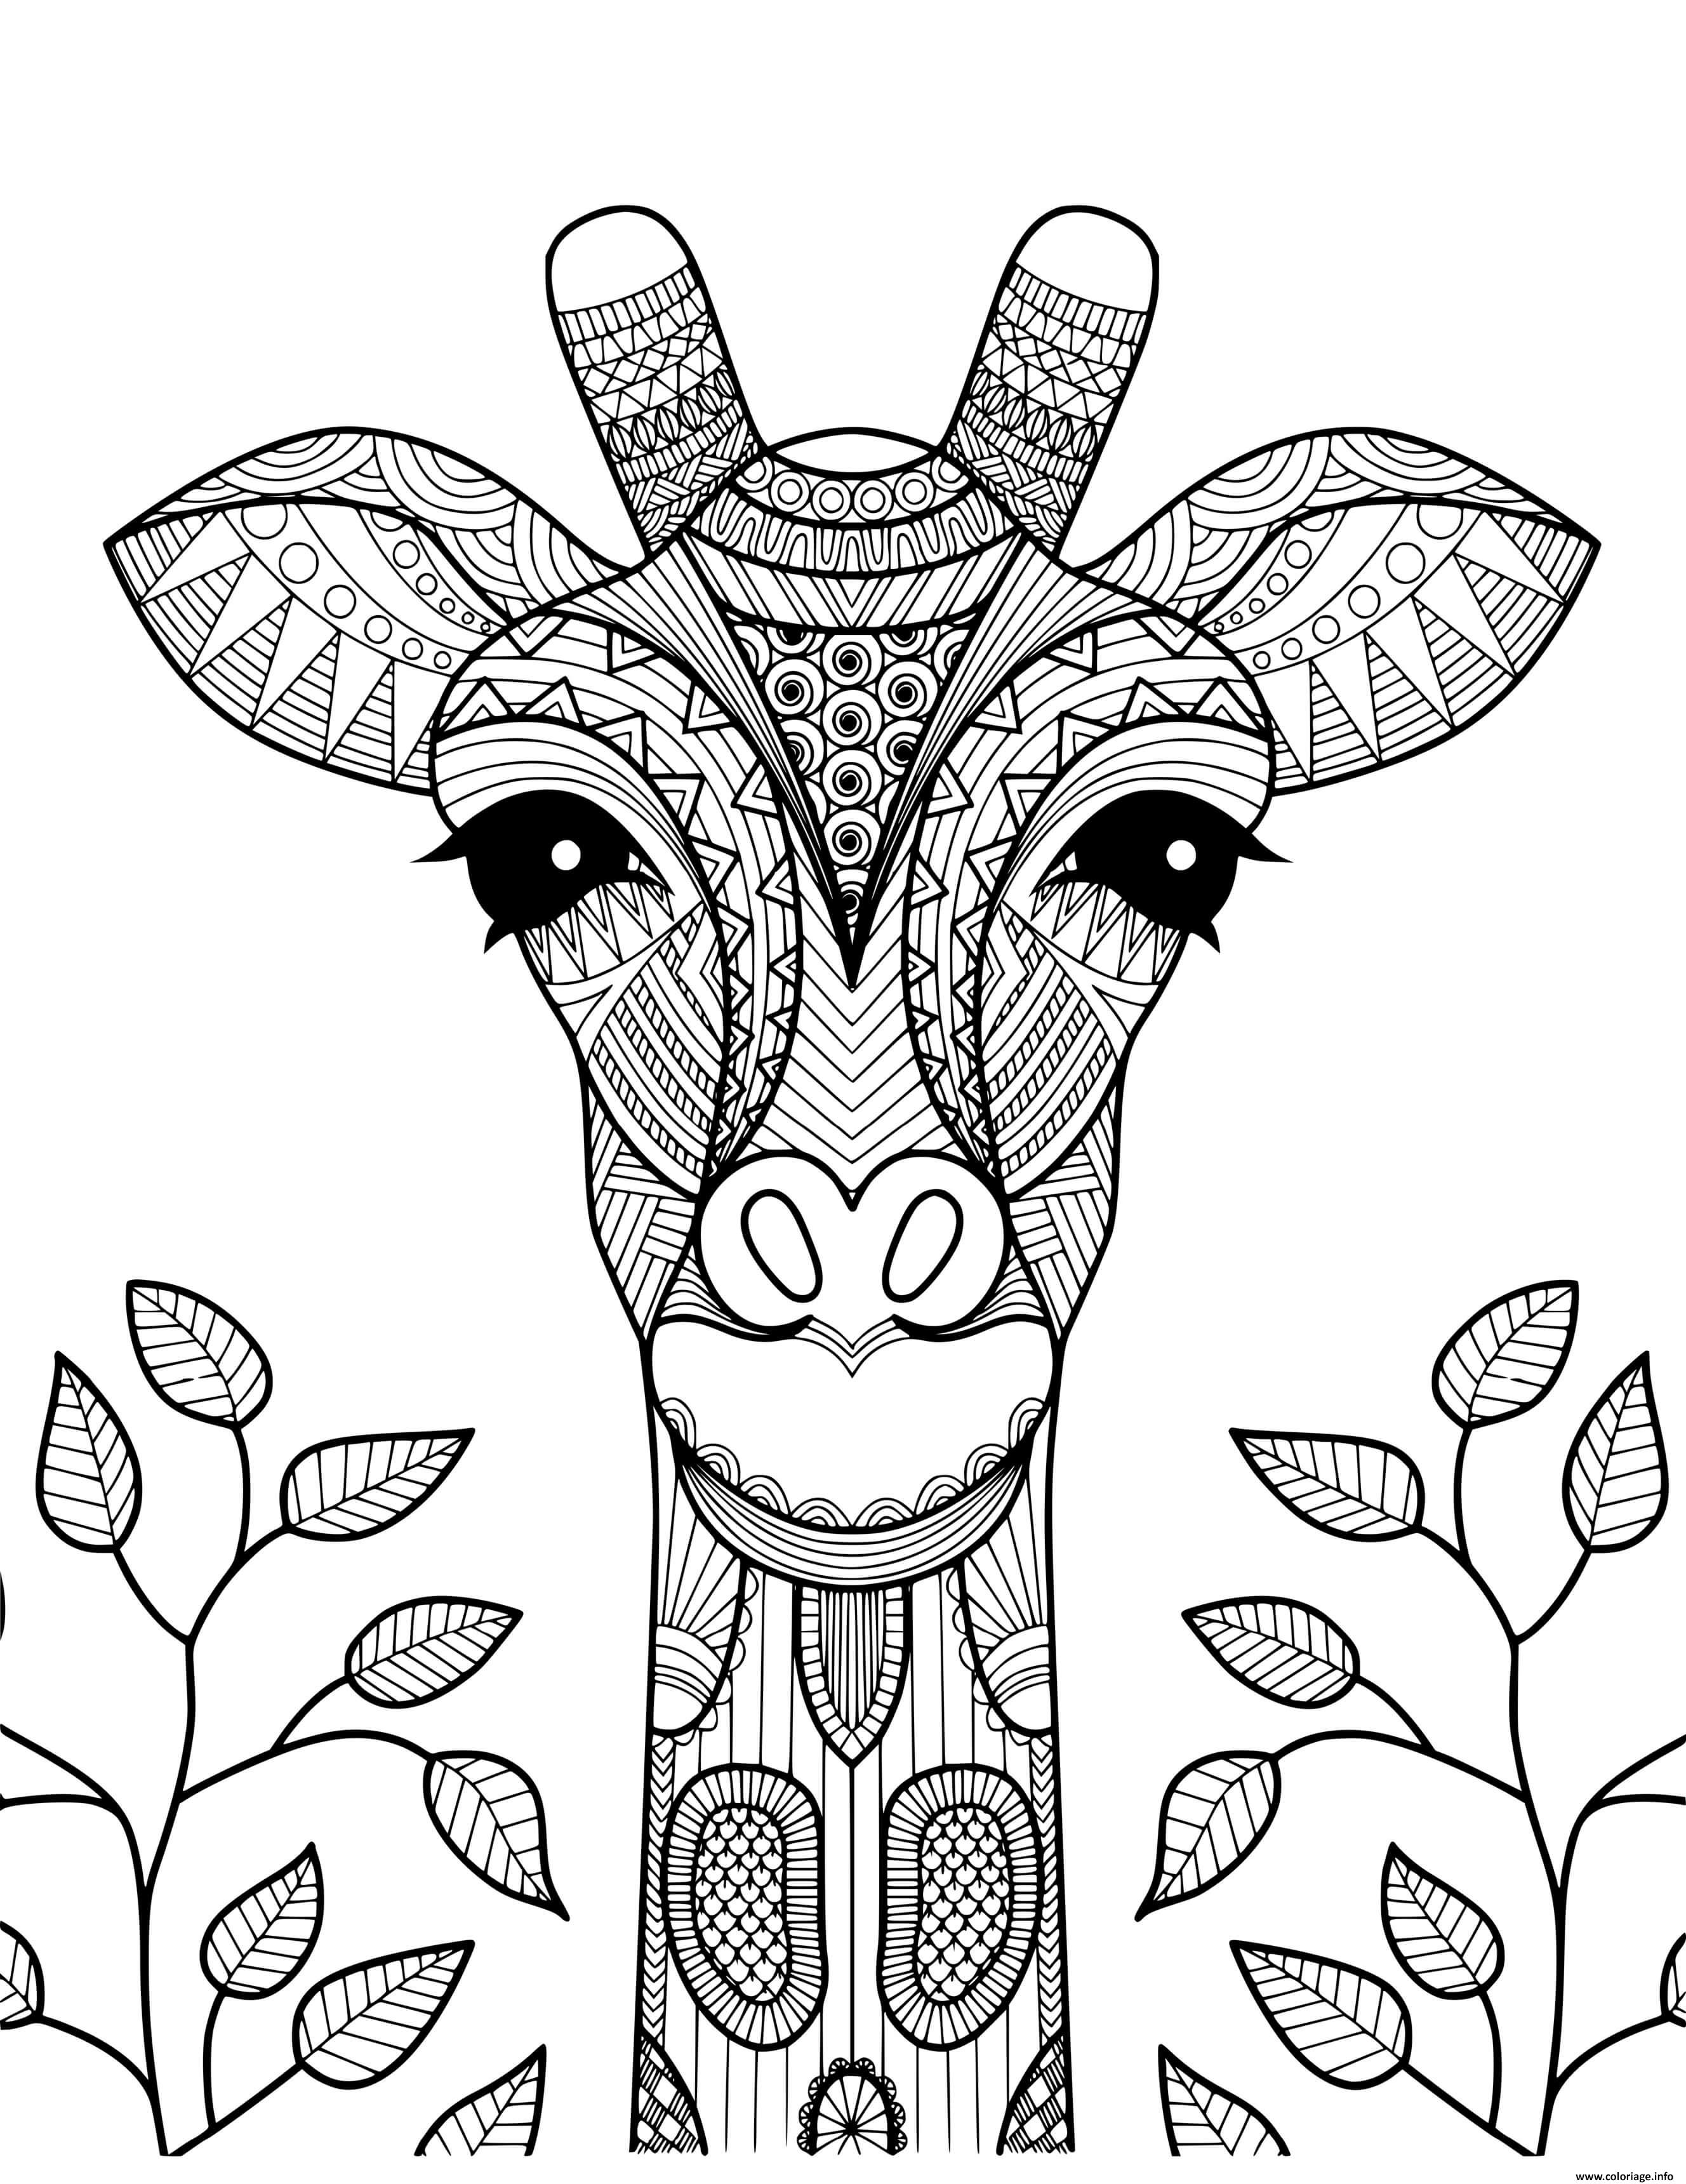 Coloriage Girafe Pour Adulte Zentangle Dessin à Imprimer